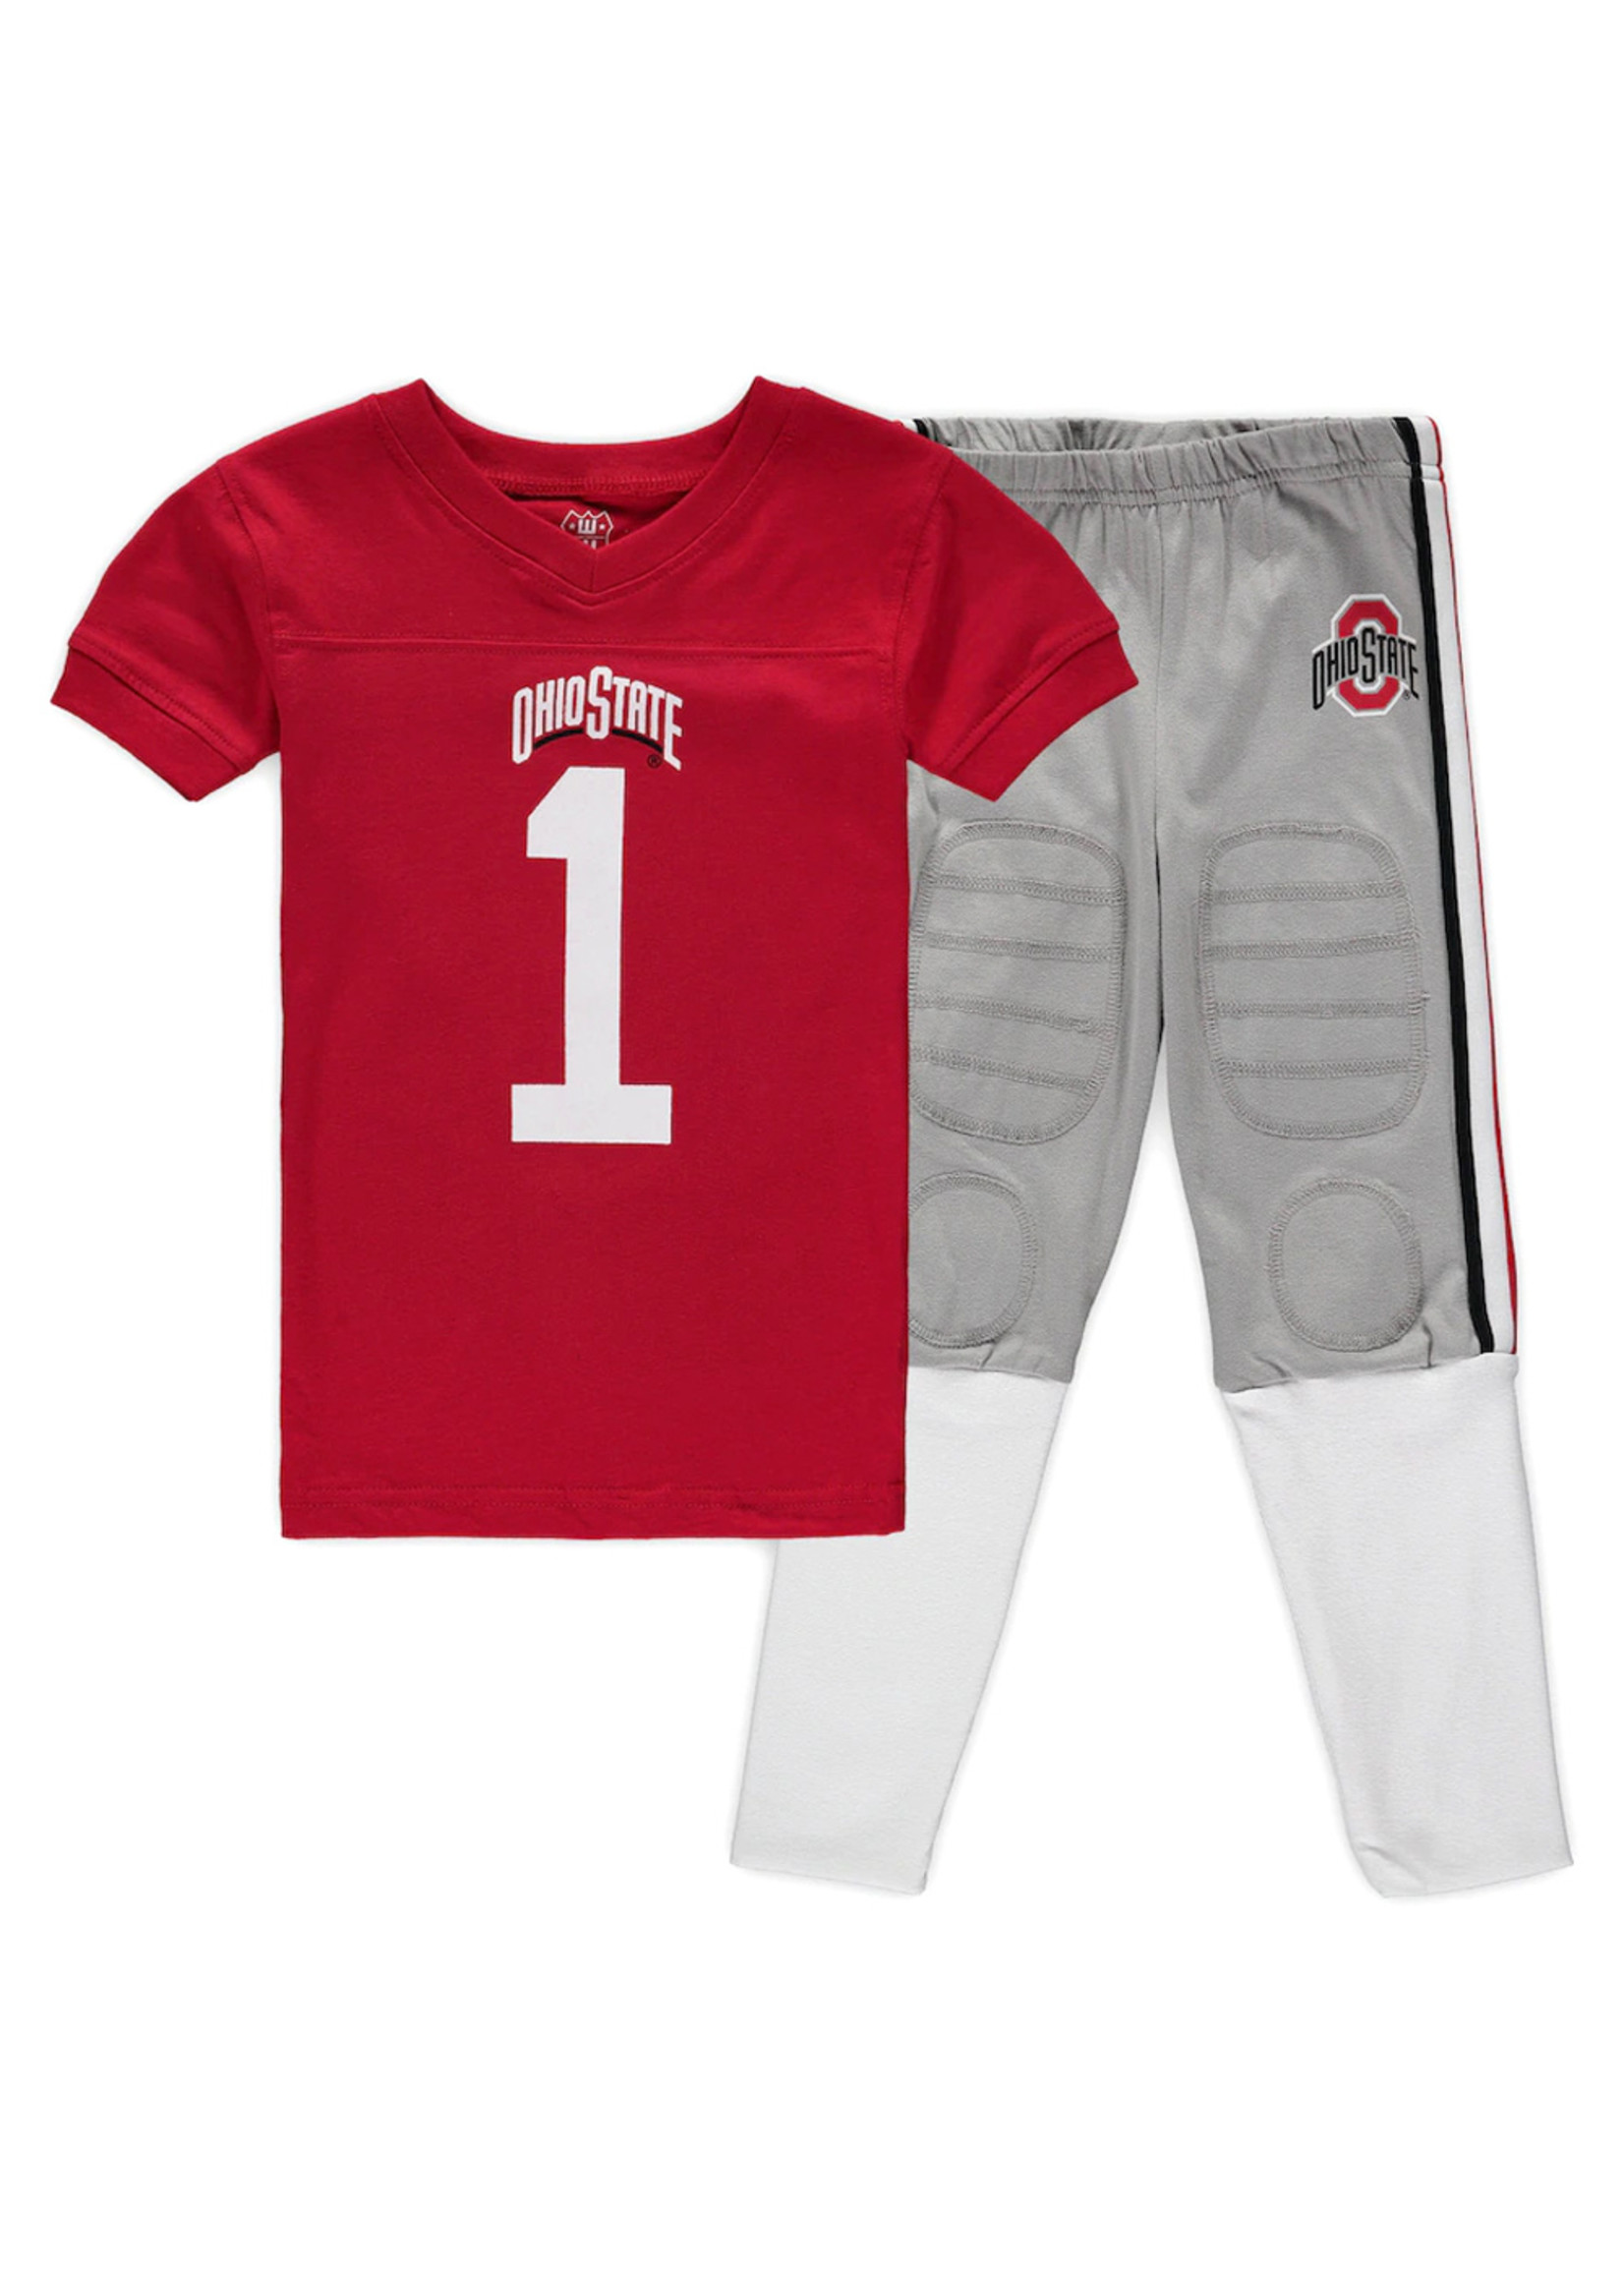 Ohio State Buckeyes Preschool Football V-Neck T-Shirt and Pants Sleep Set - Scarlet